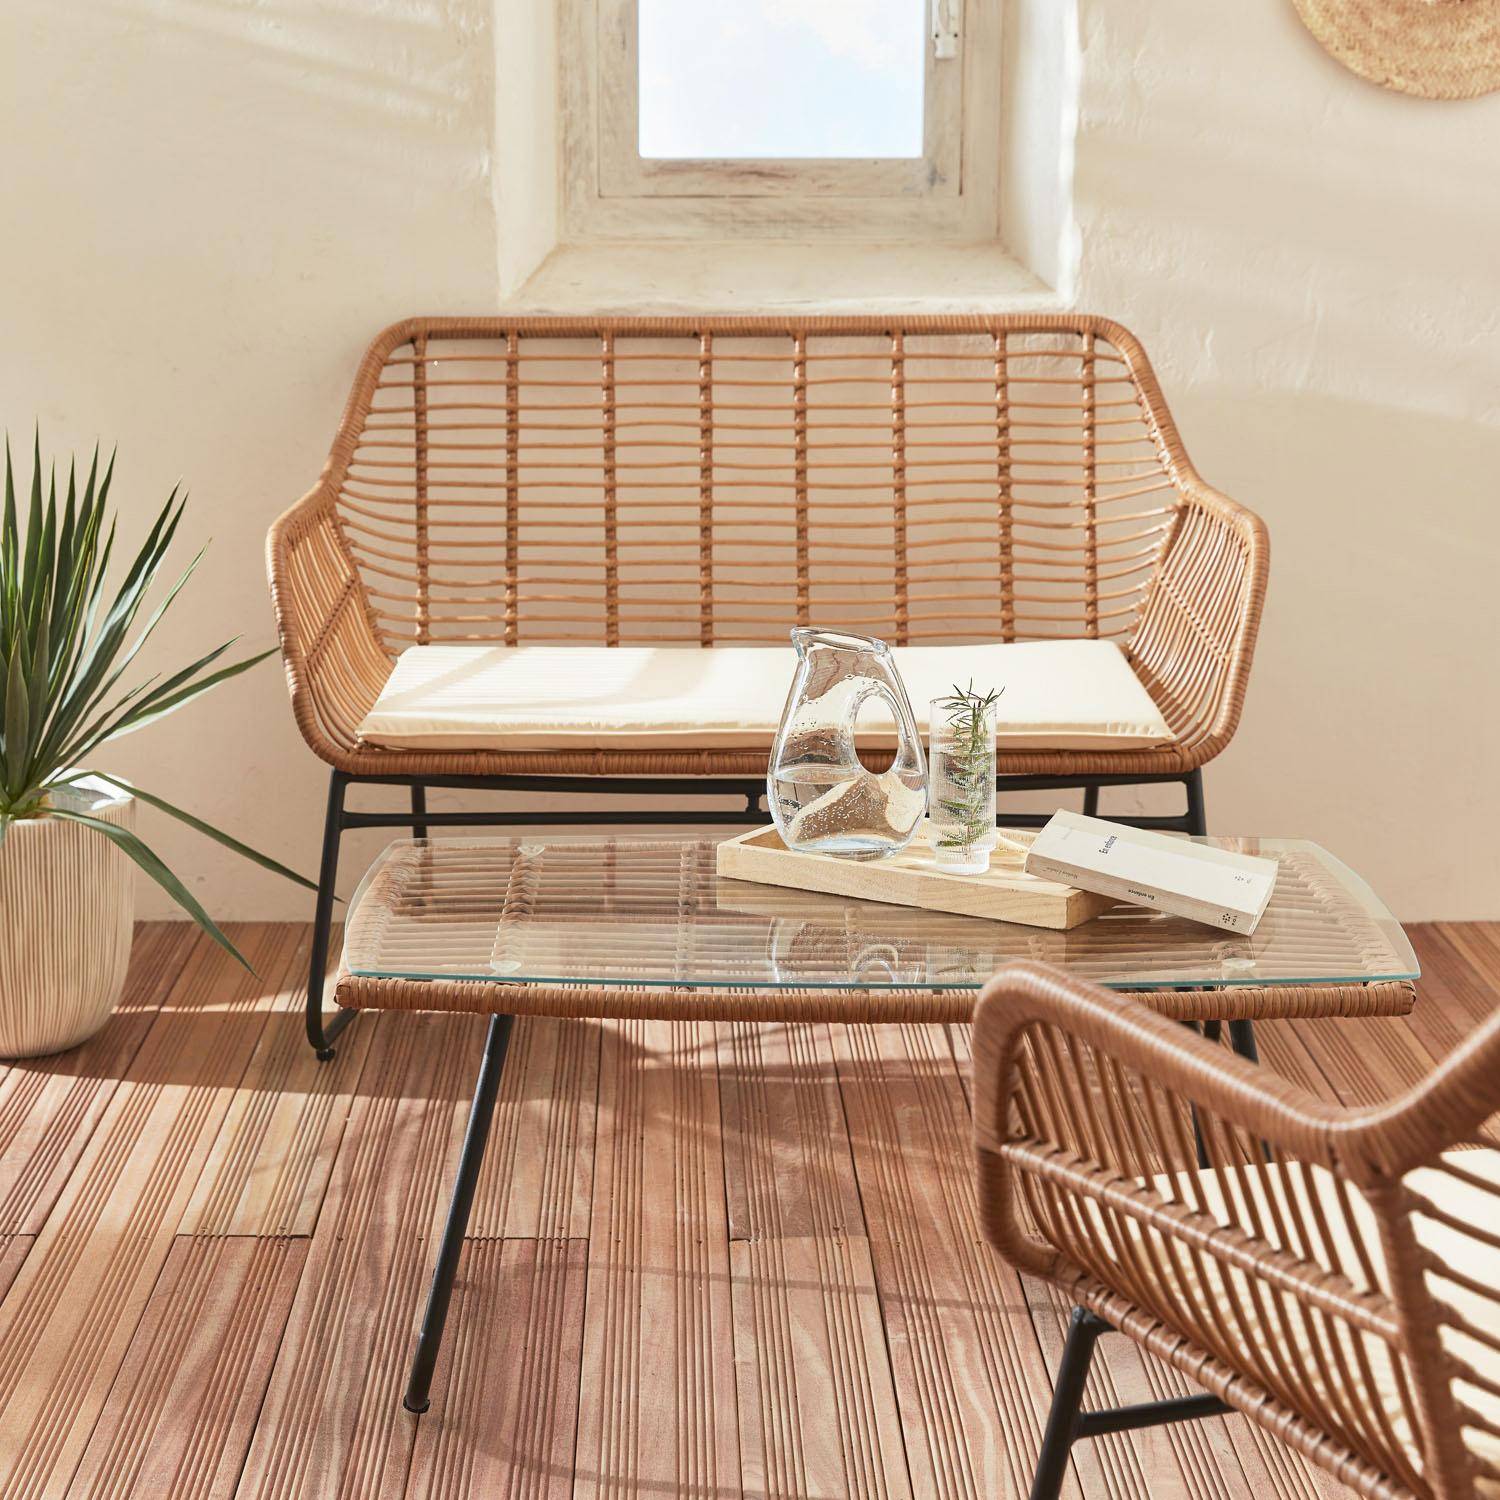 Garden lounge 4 pessoas - resina de efeito bambu e estrutura metálica preta - NATUNA - estilo colonial, bi-material Photo2